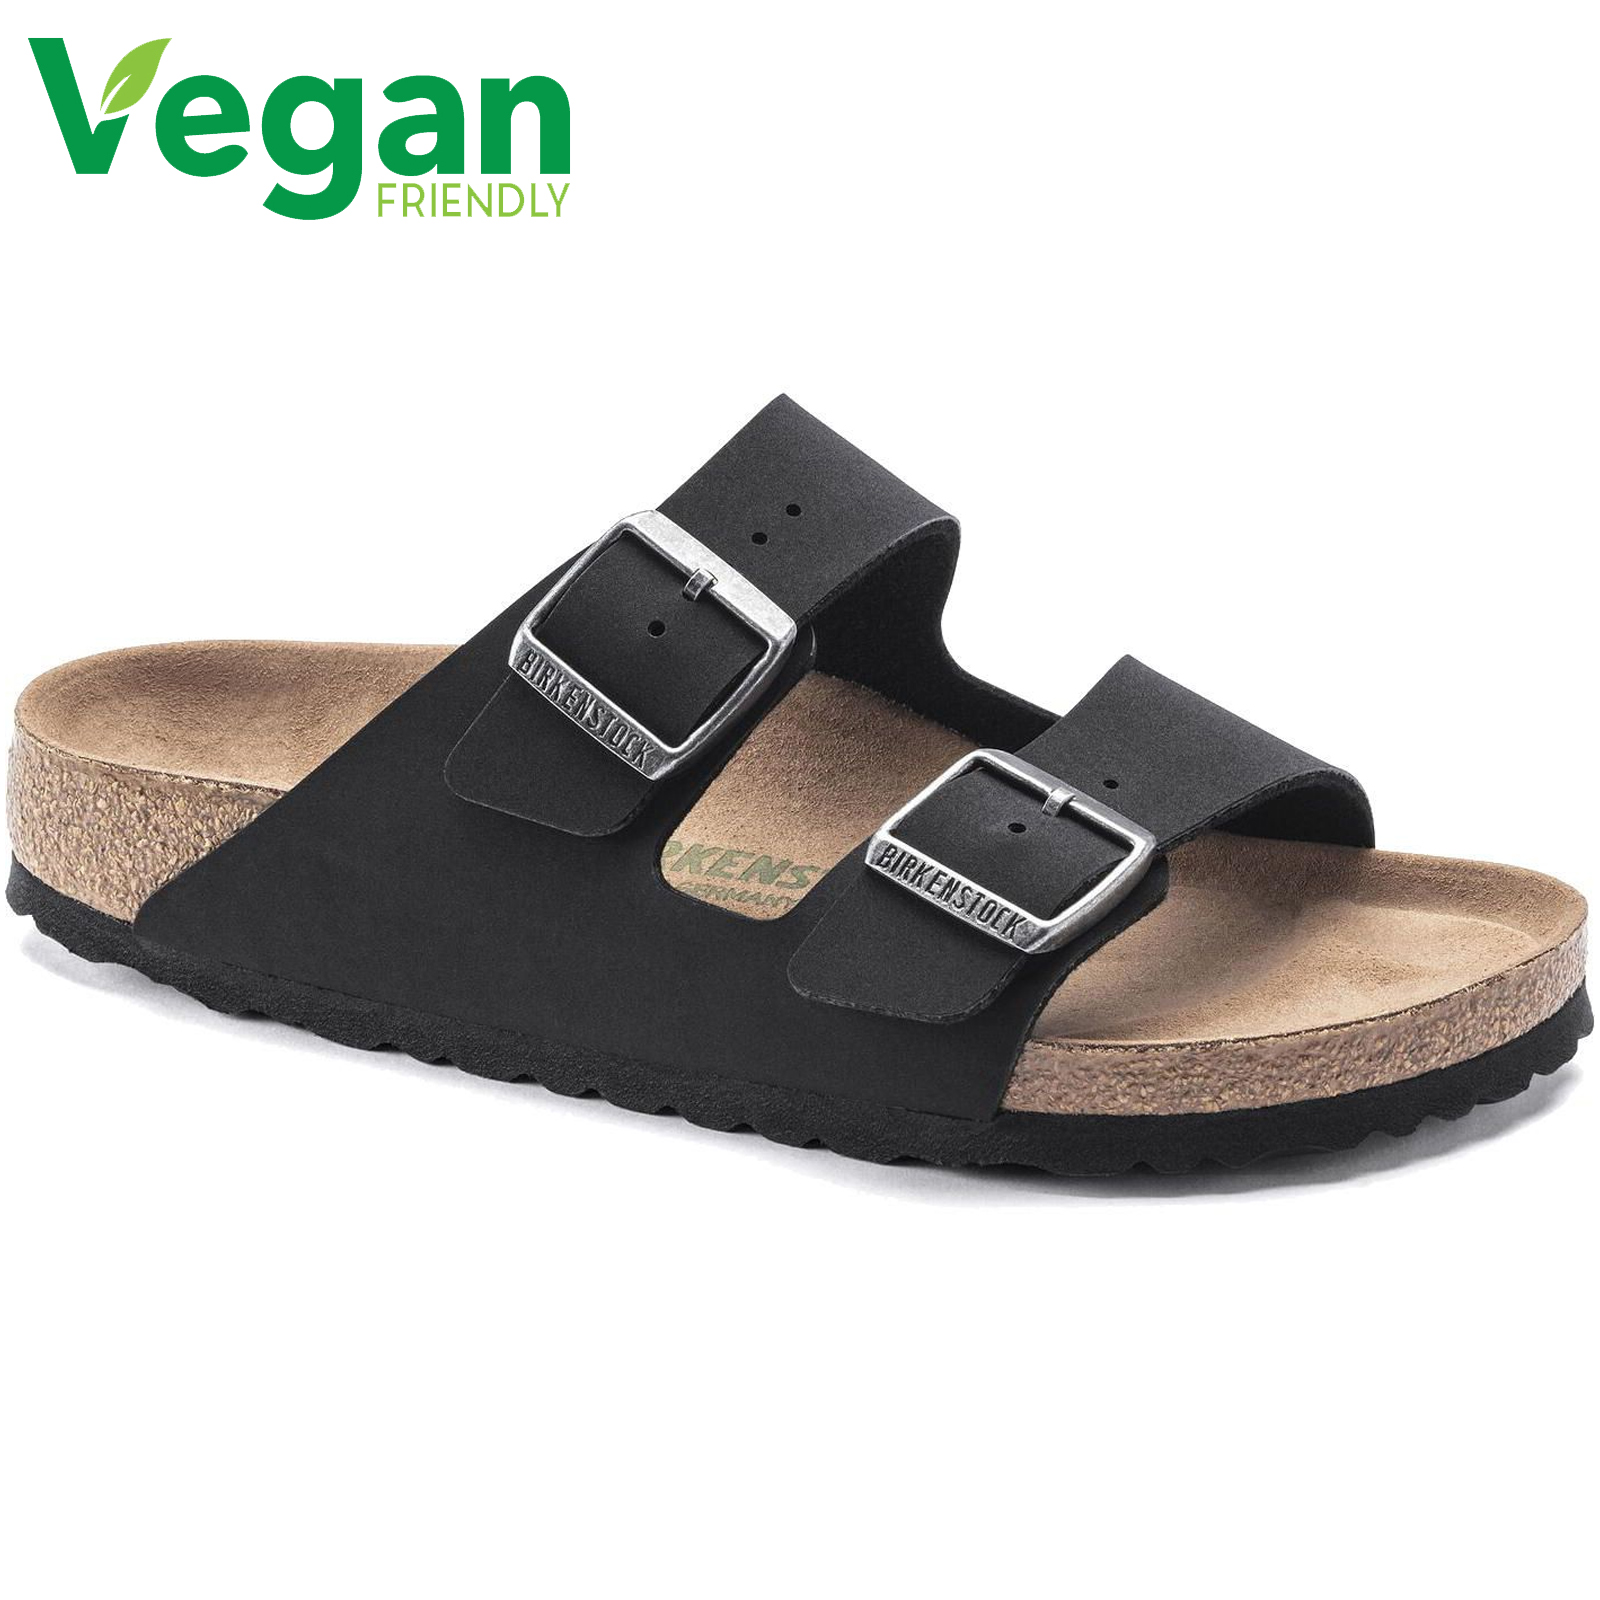 Birkenstock Mens Arizona Vegan Sandals - Black 2951